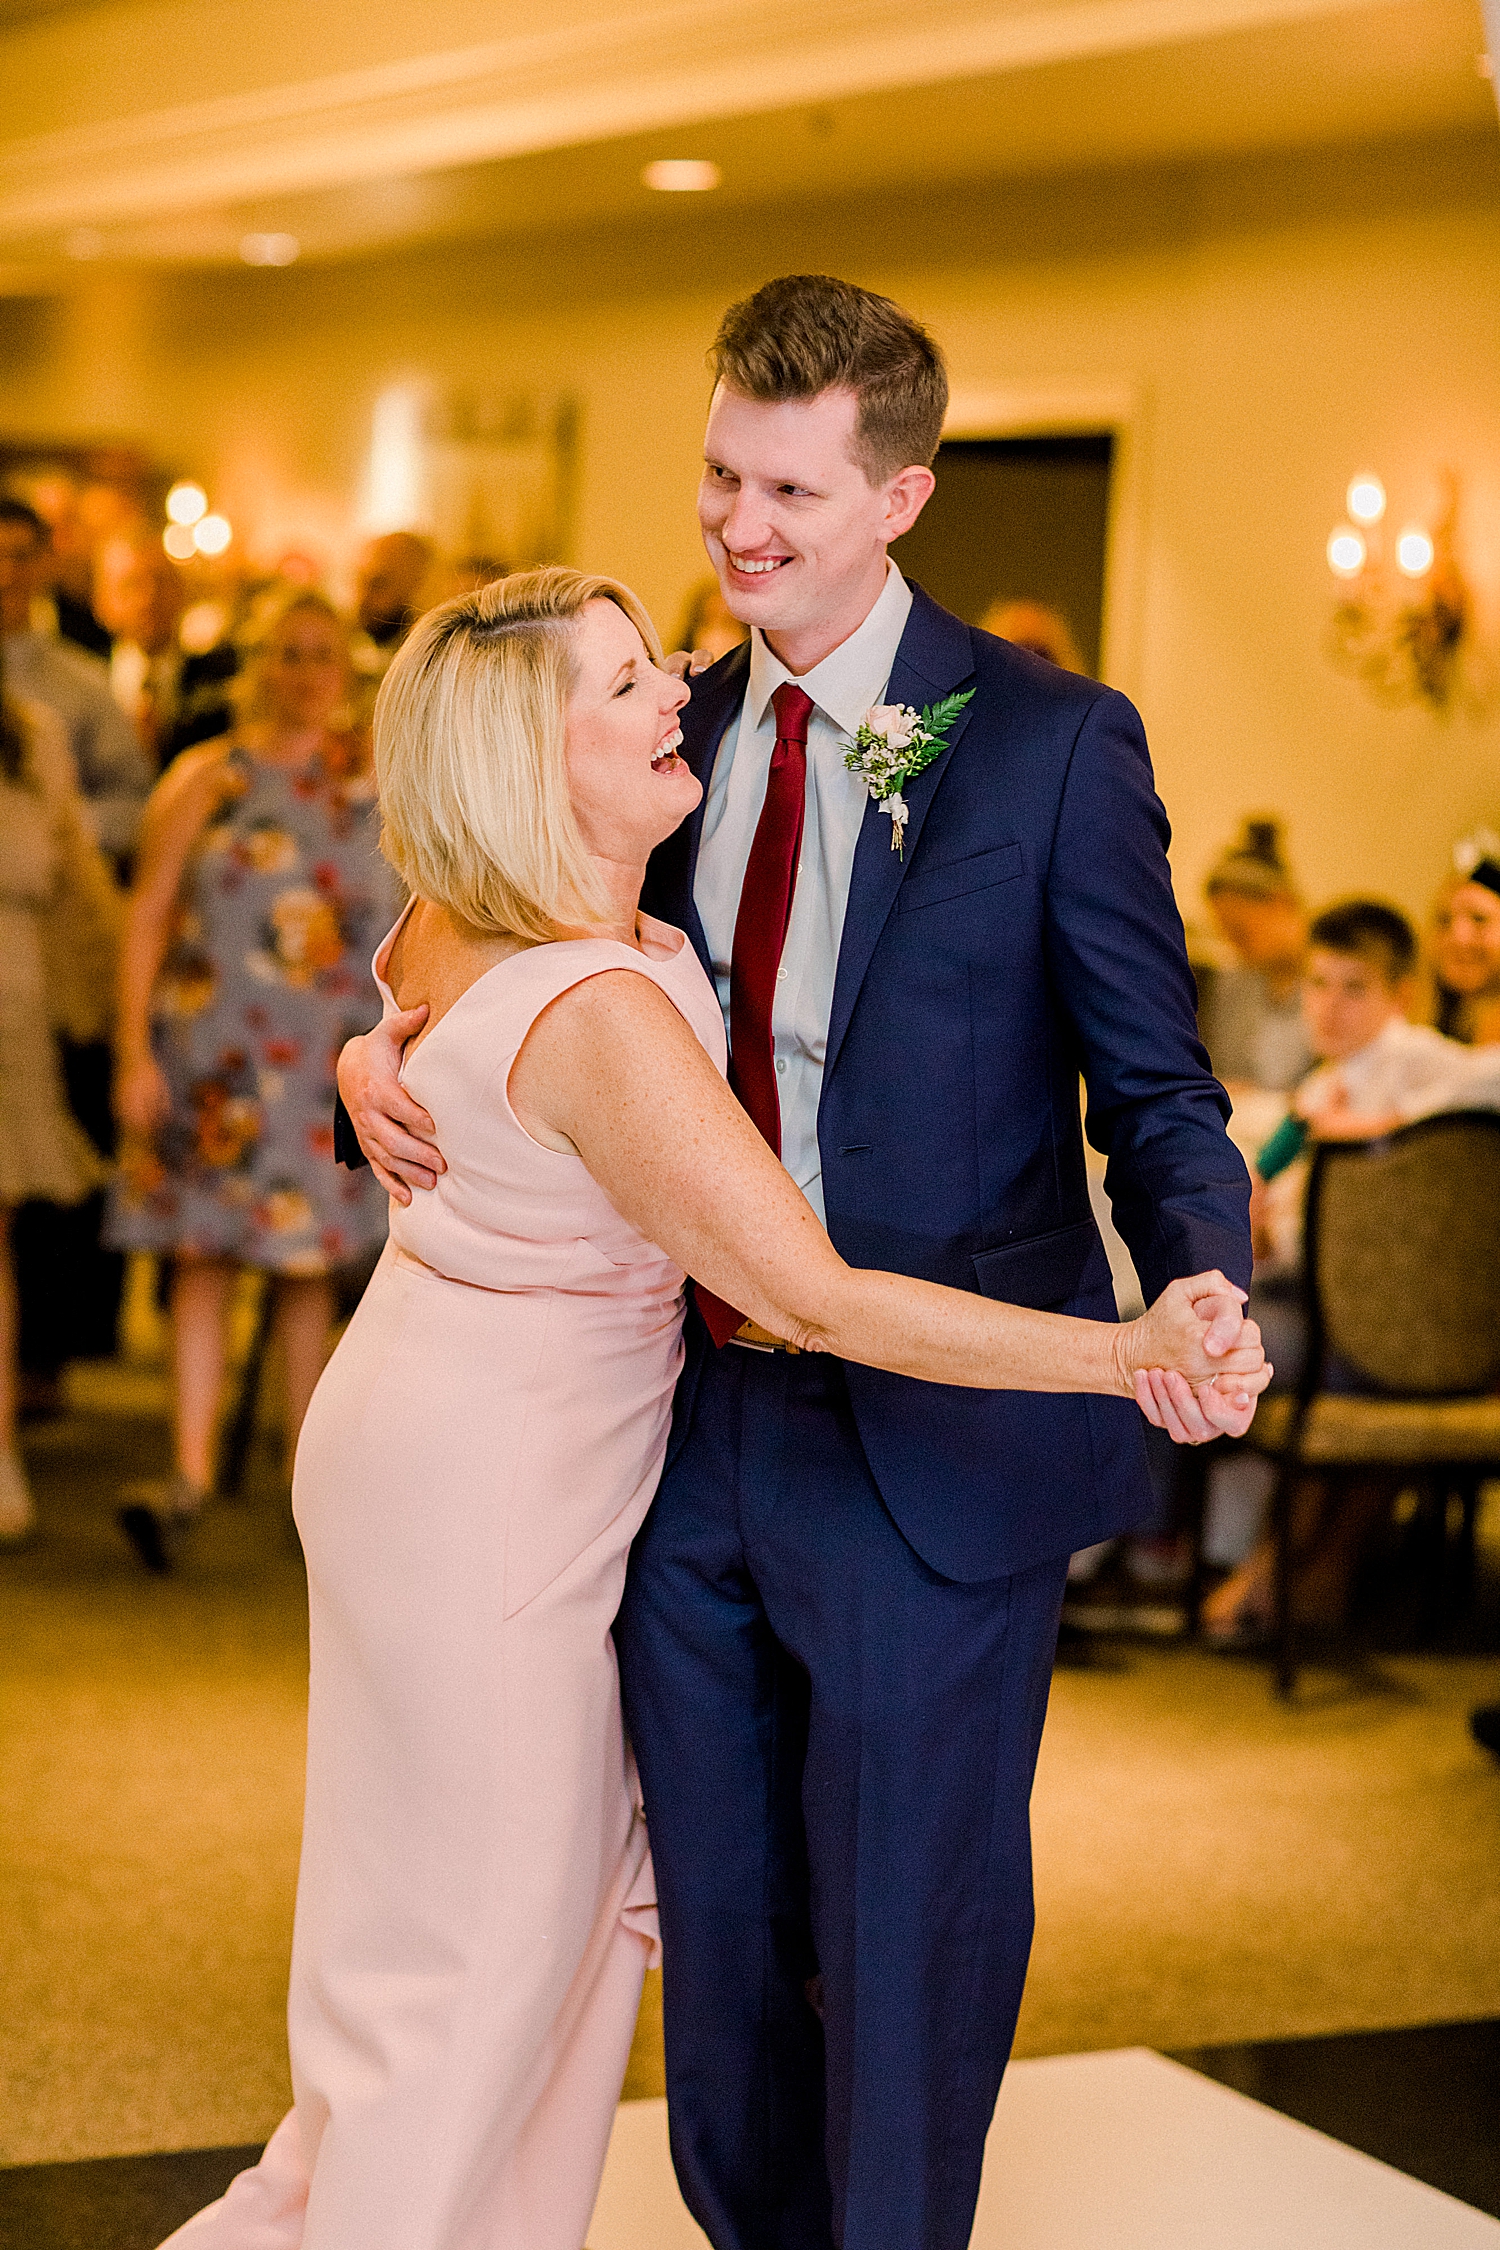 mom and groom dance together at Birmingham AL wedding reception